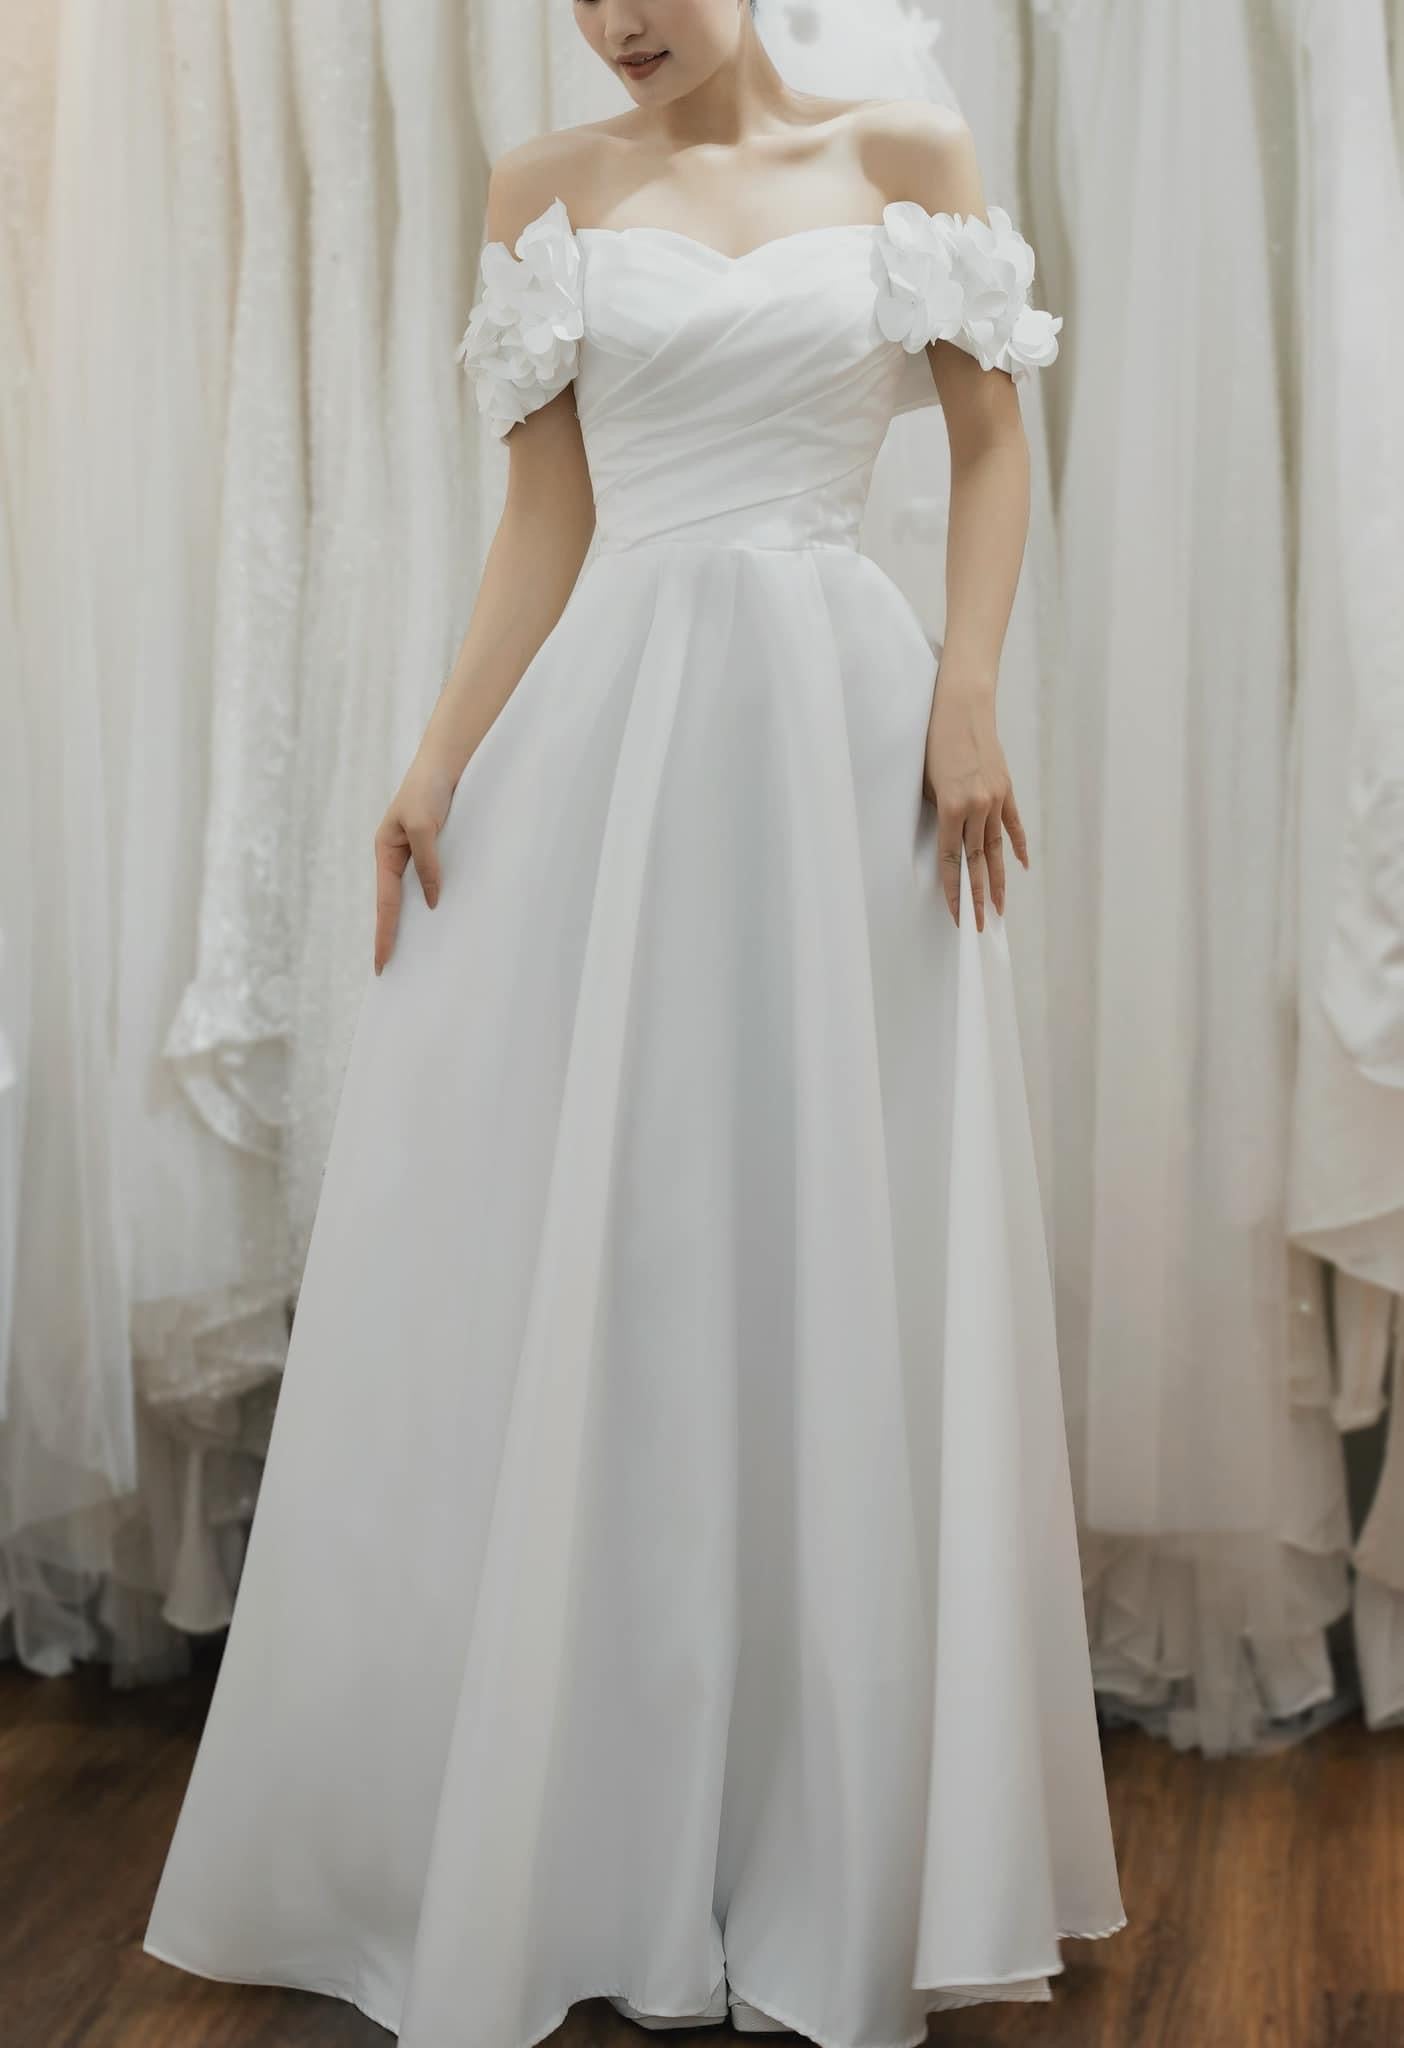 Wedding dress - 9716